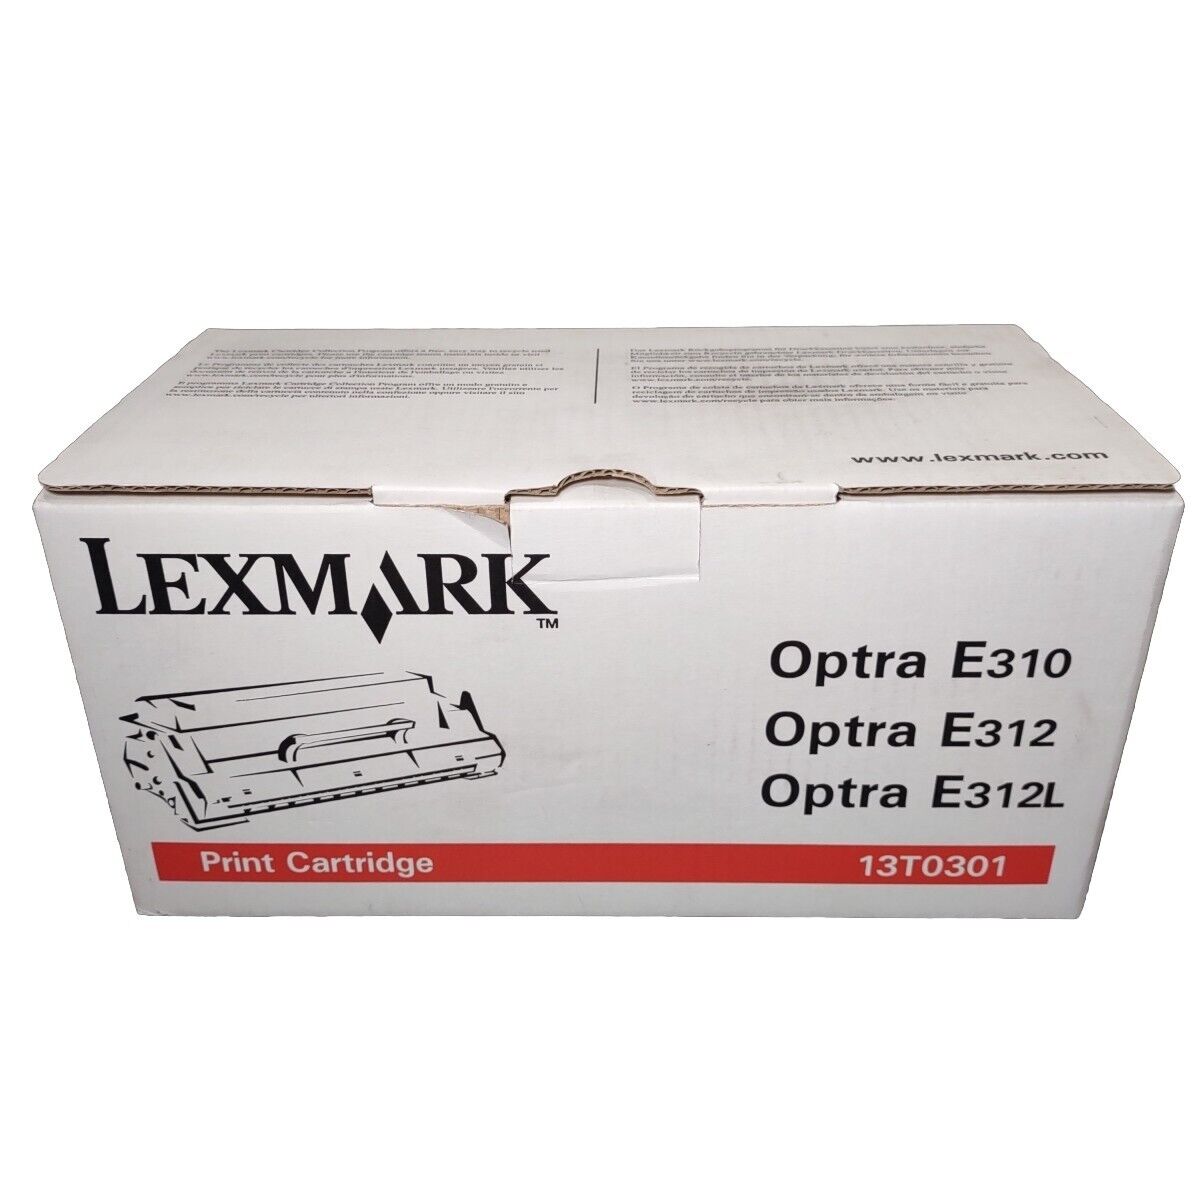 Lexmark High Yield Print Cartridge 13T0101 Optra E312 E312L E310 New Open Box